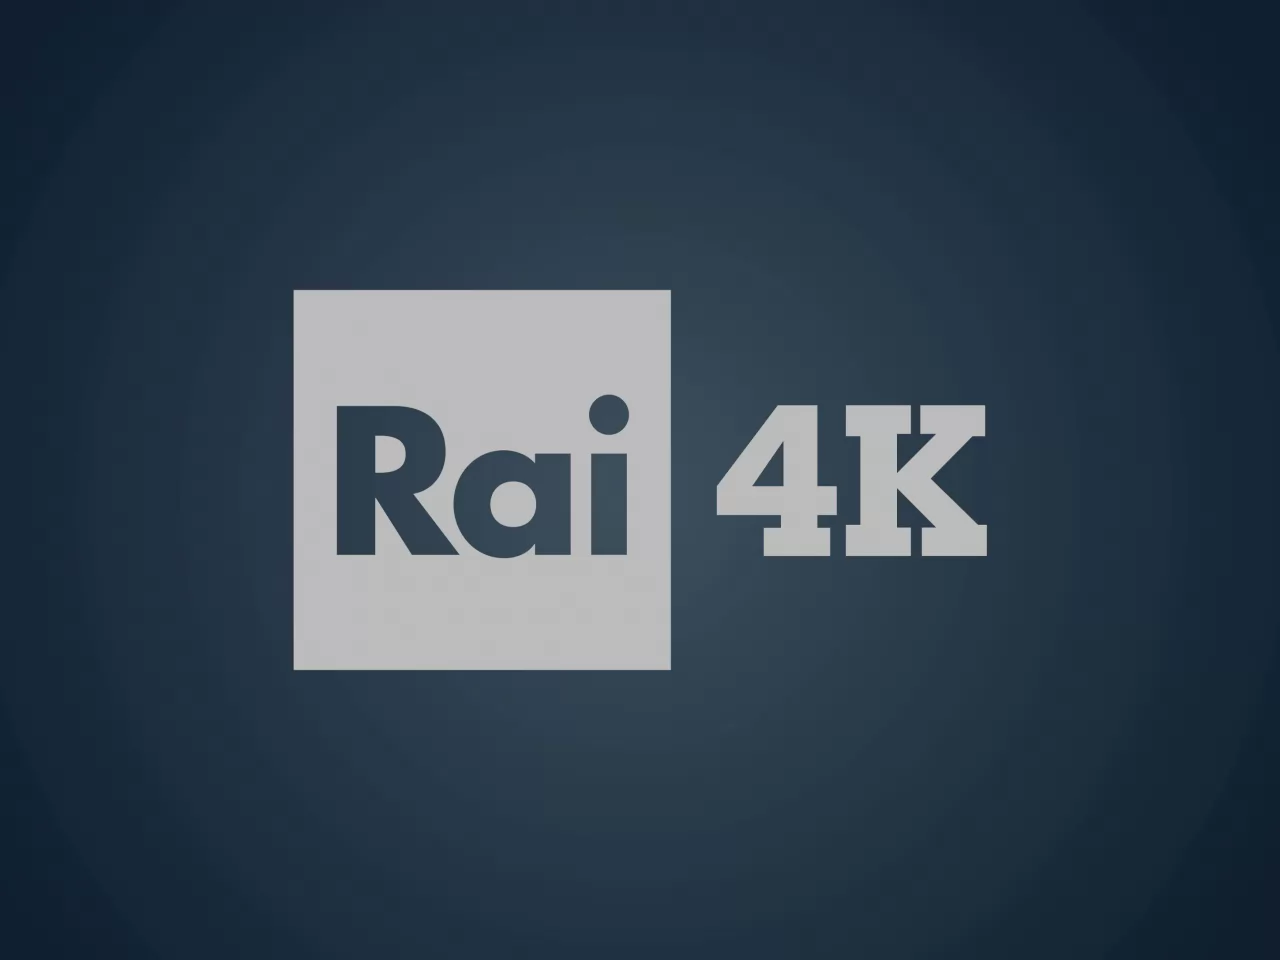 Profile RAI 4K Tv Channels